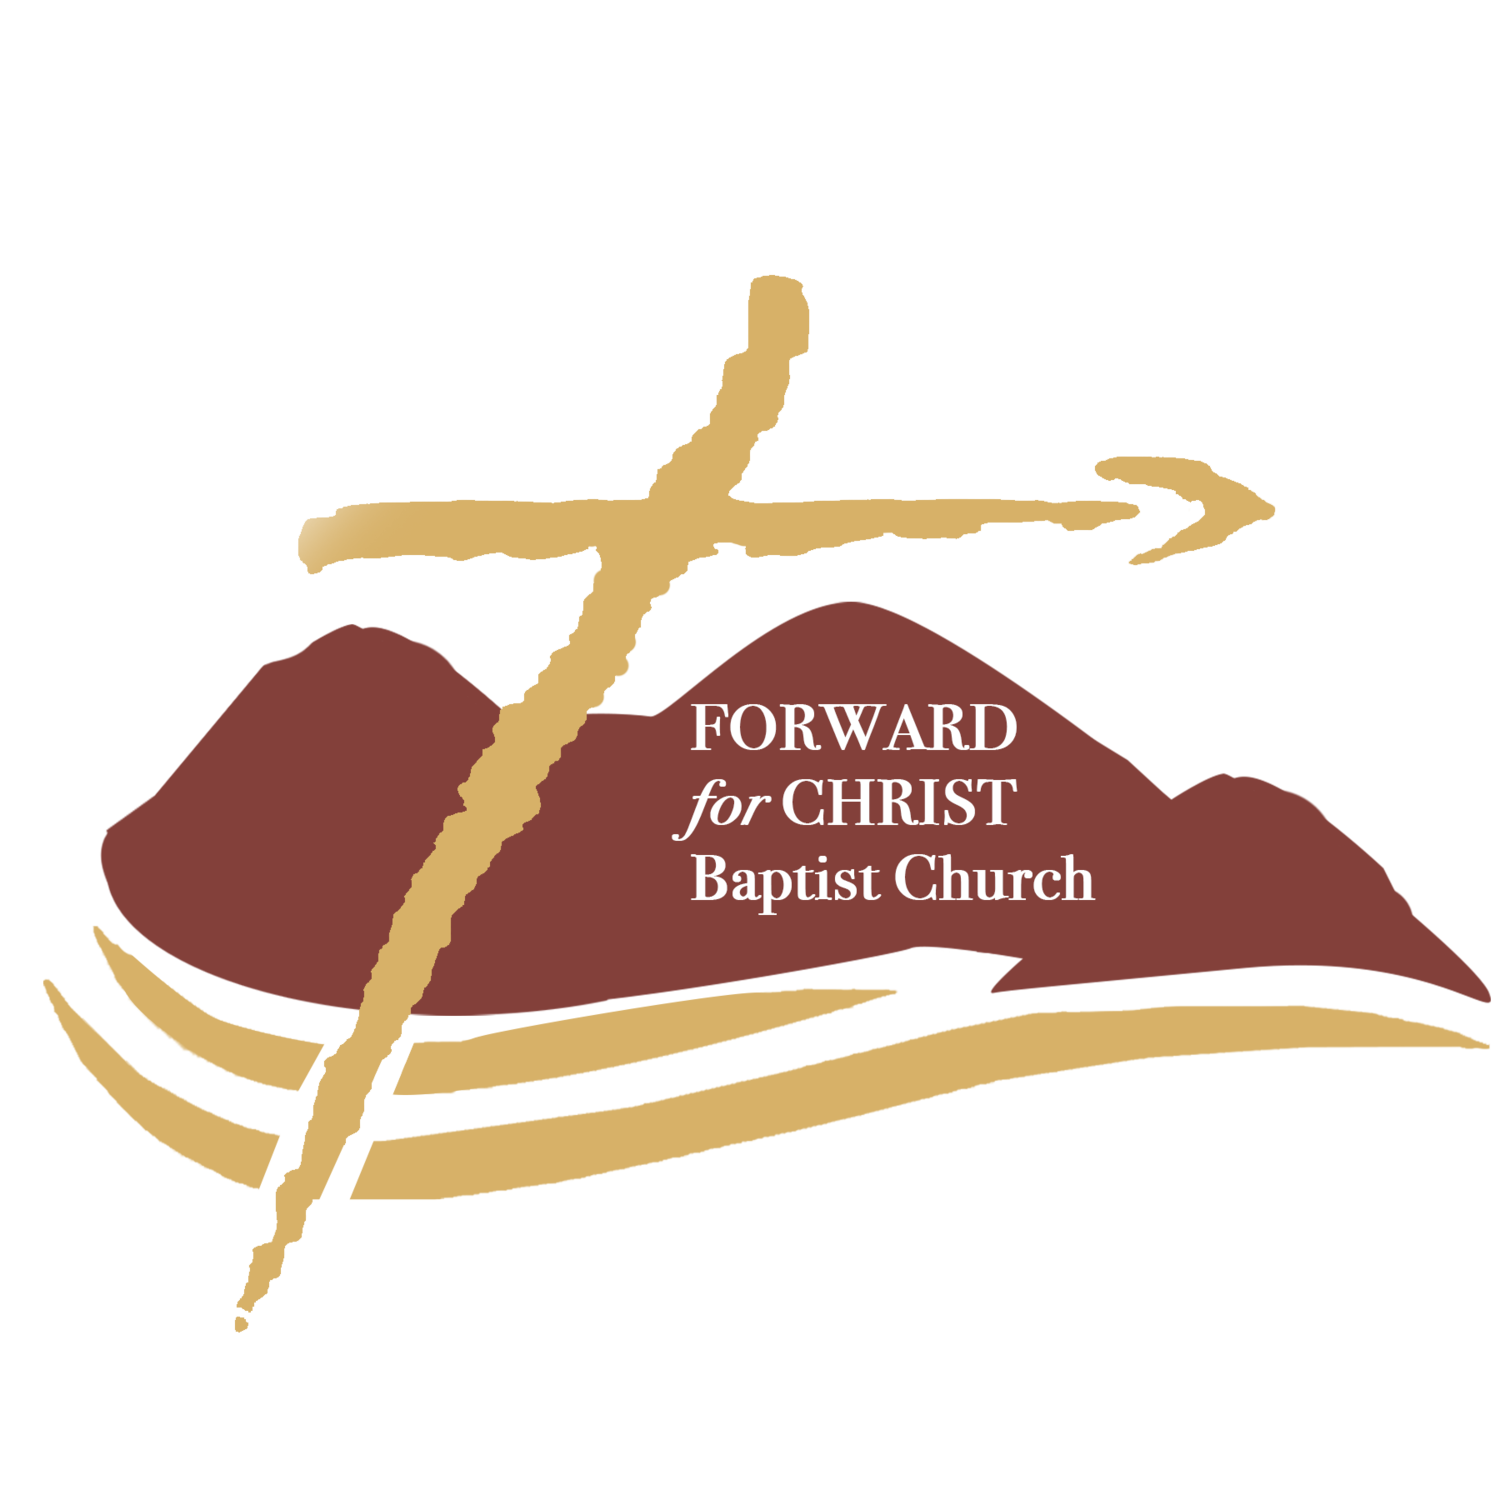 Forward for Christ Baptist Church